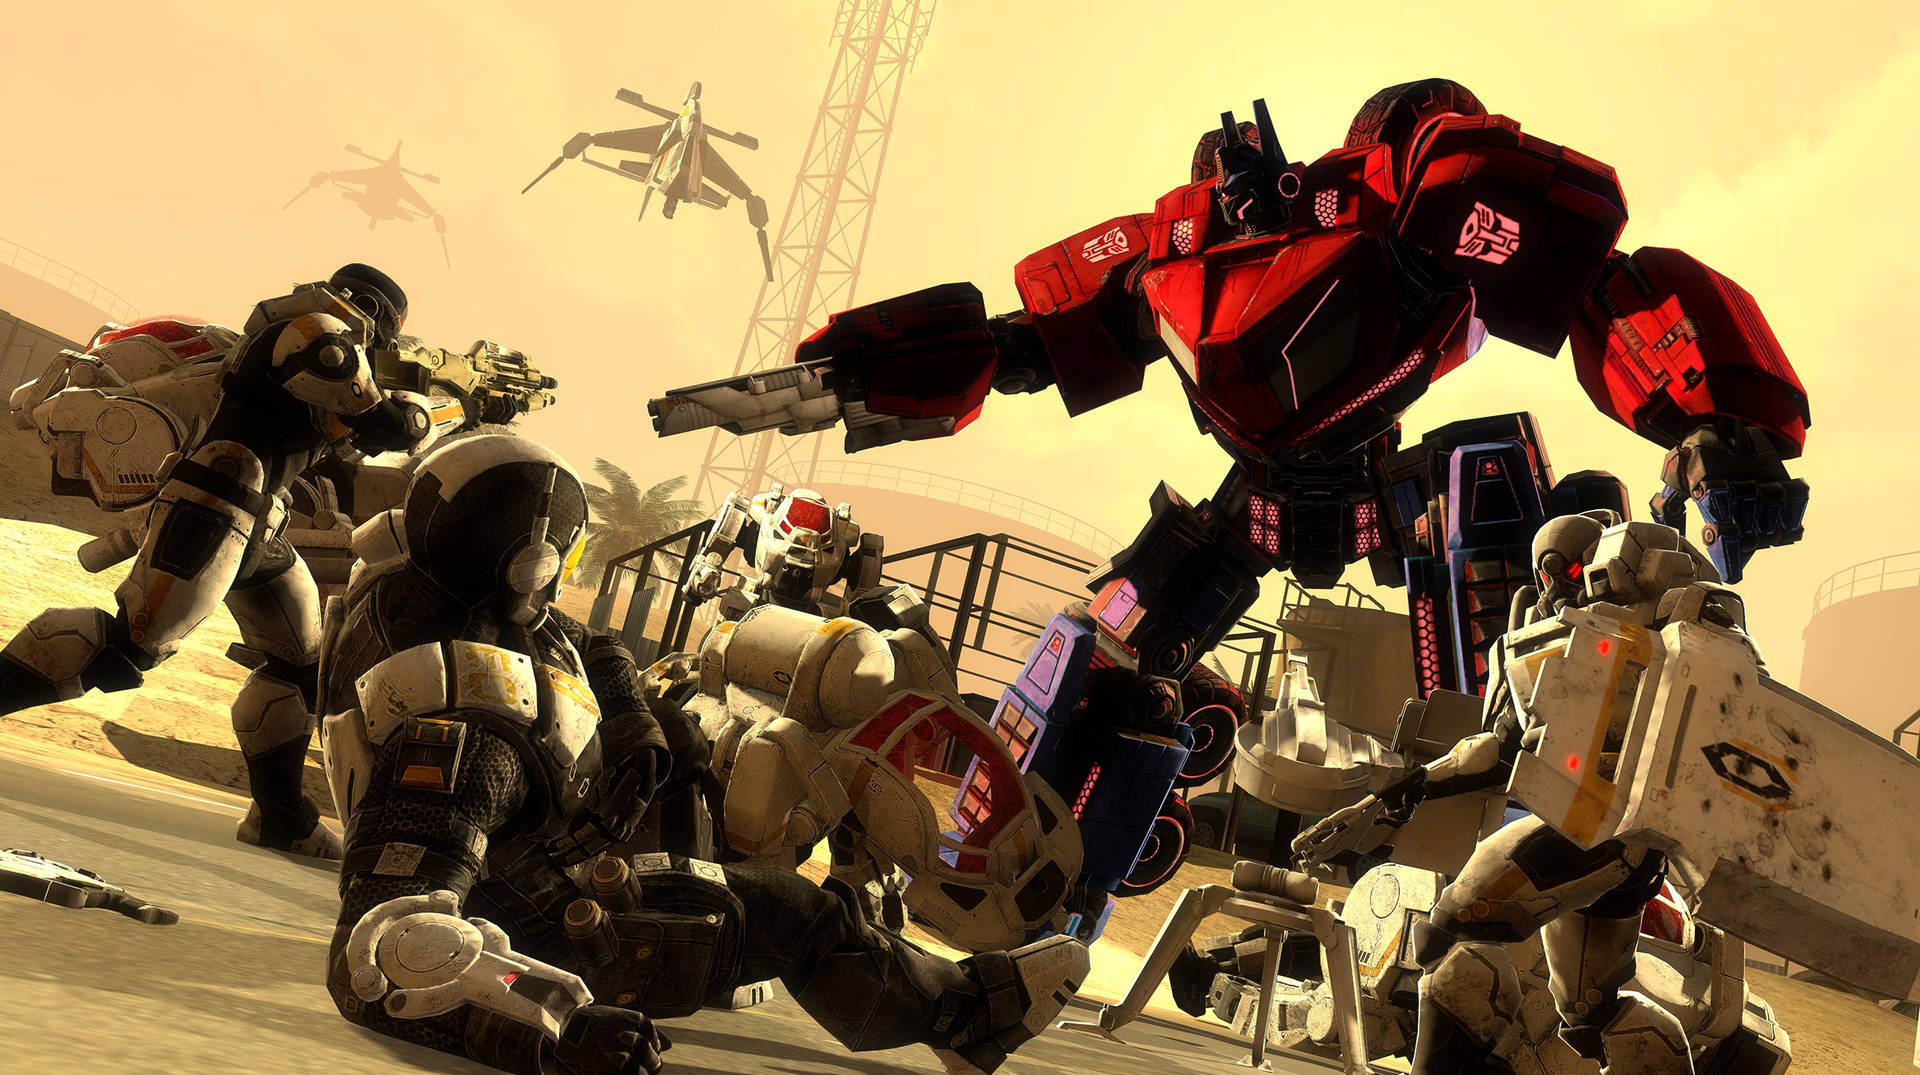 Epic Battle Scene In Transformers Prime Wallpaper